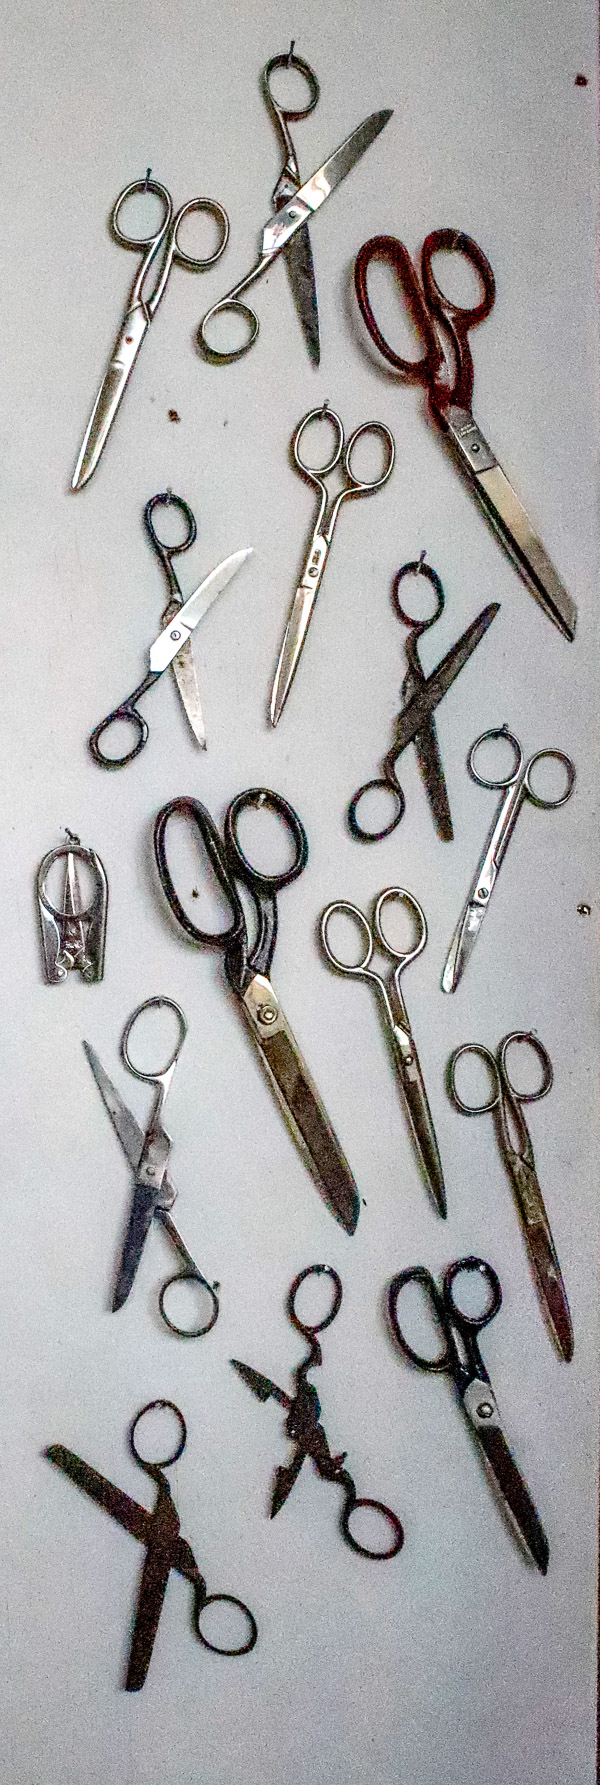 Scissors collected in the studio